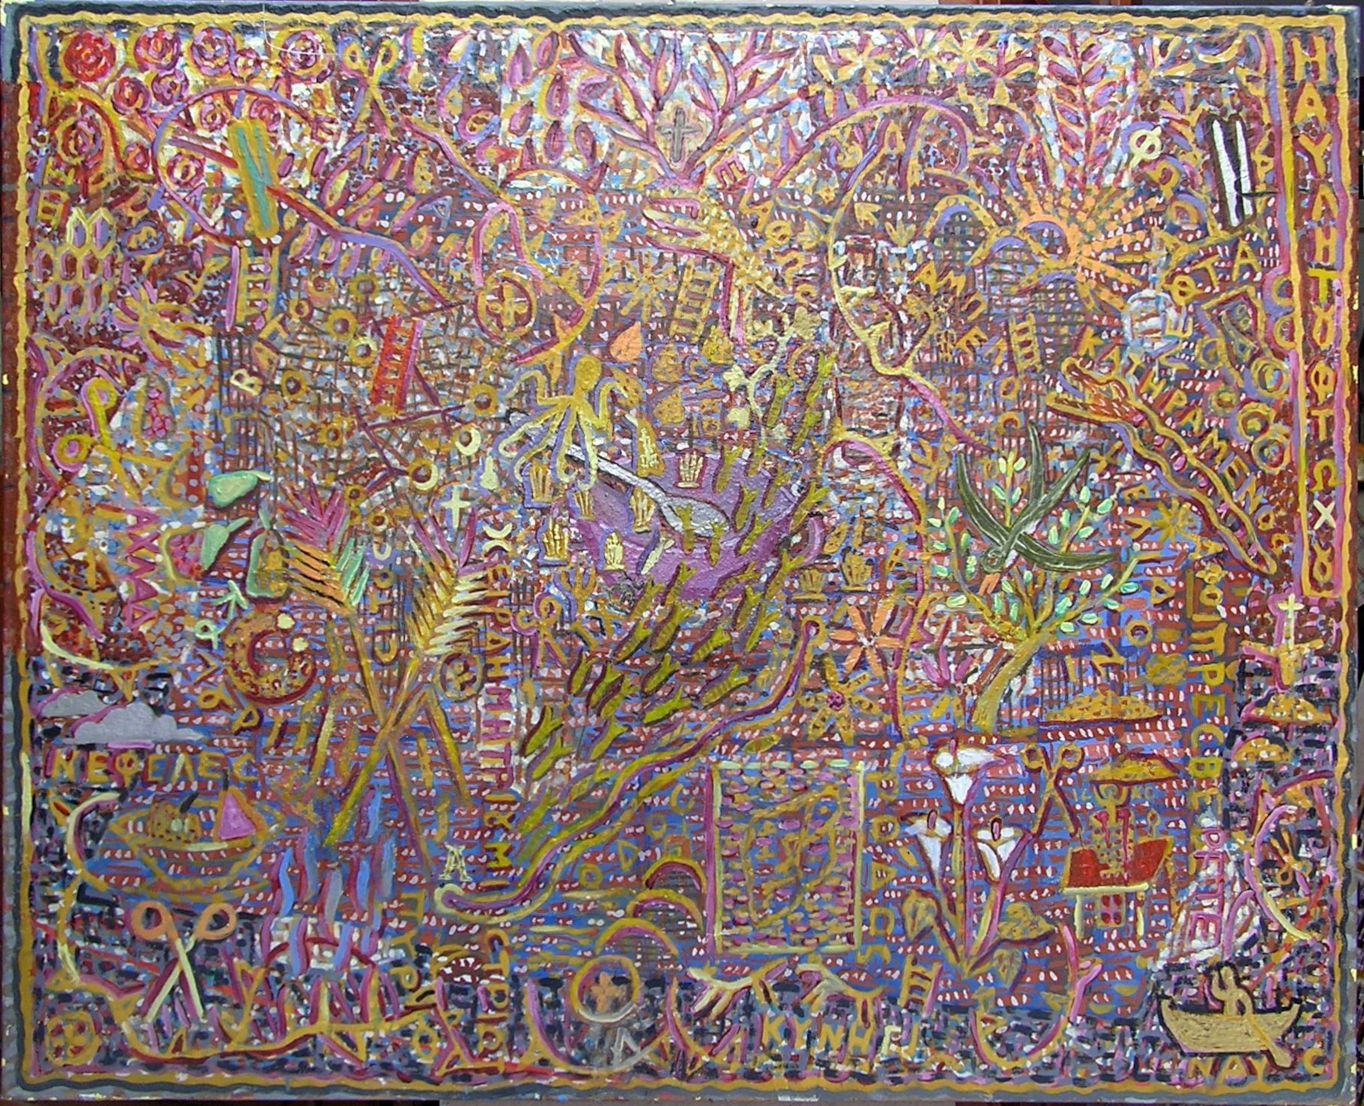 The poor man’s garden. Oil on canvas, 106 x 87 (cm)